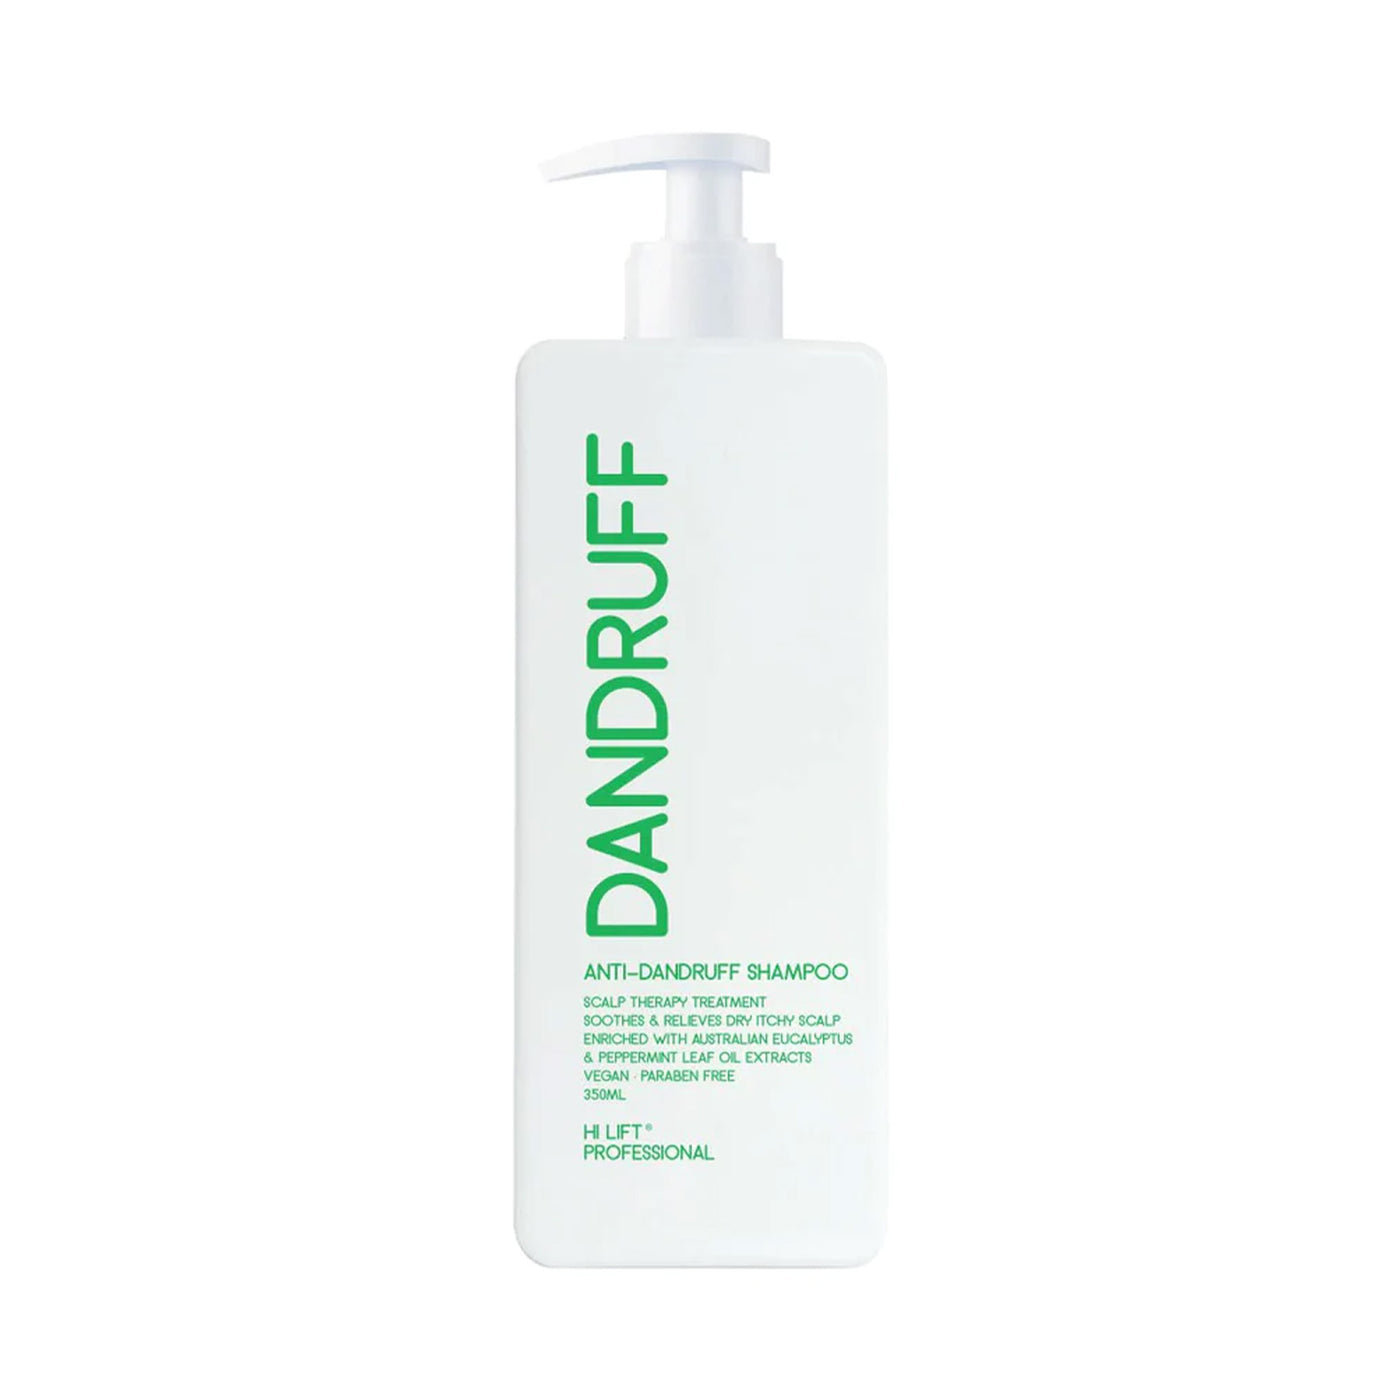 Hi Lift Anti-Dandruff Shampoo 350ml